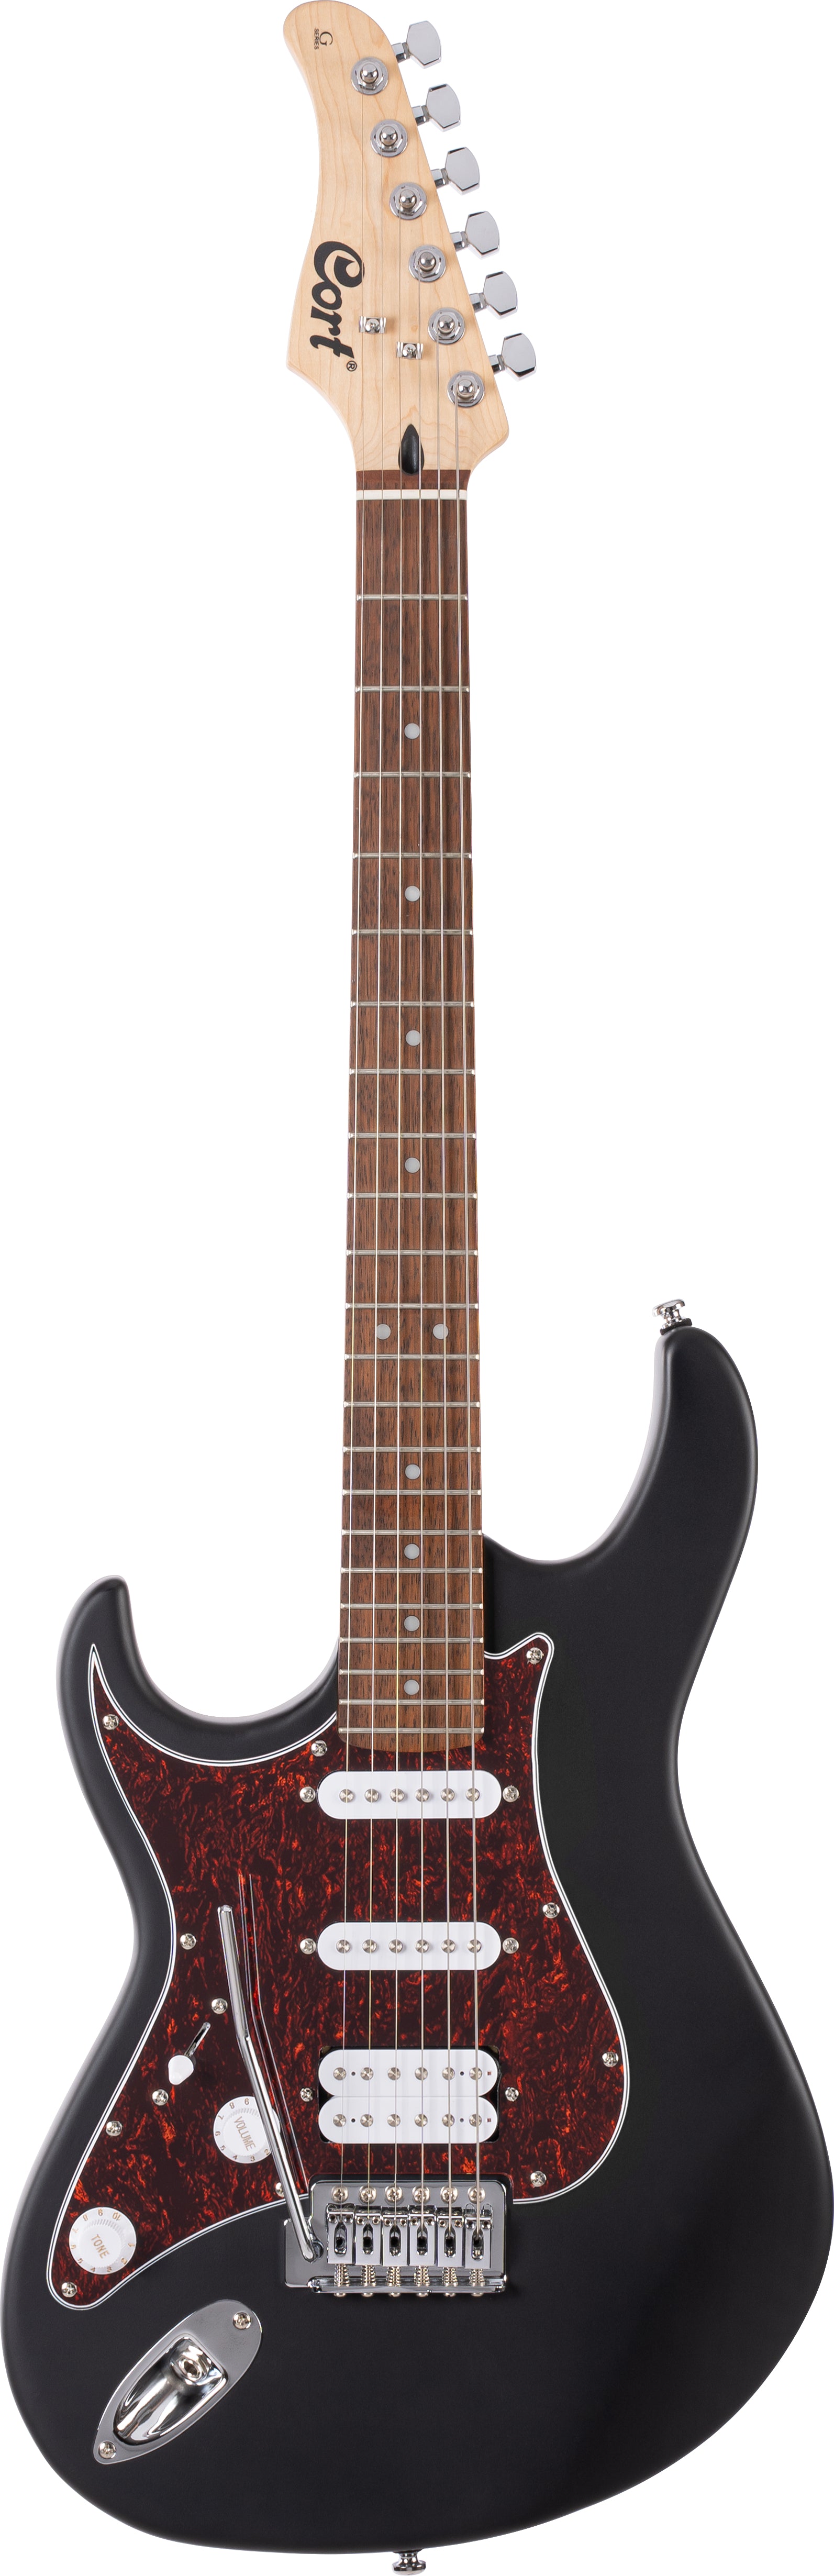 Cort G110 Left Handed Open Pore Black-Richards Guitars Of Stratford Upon Avon